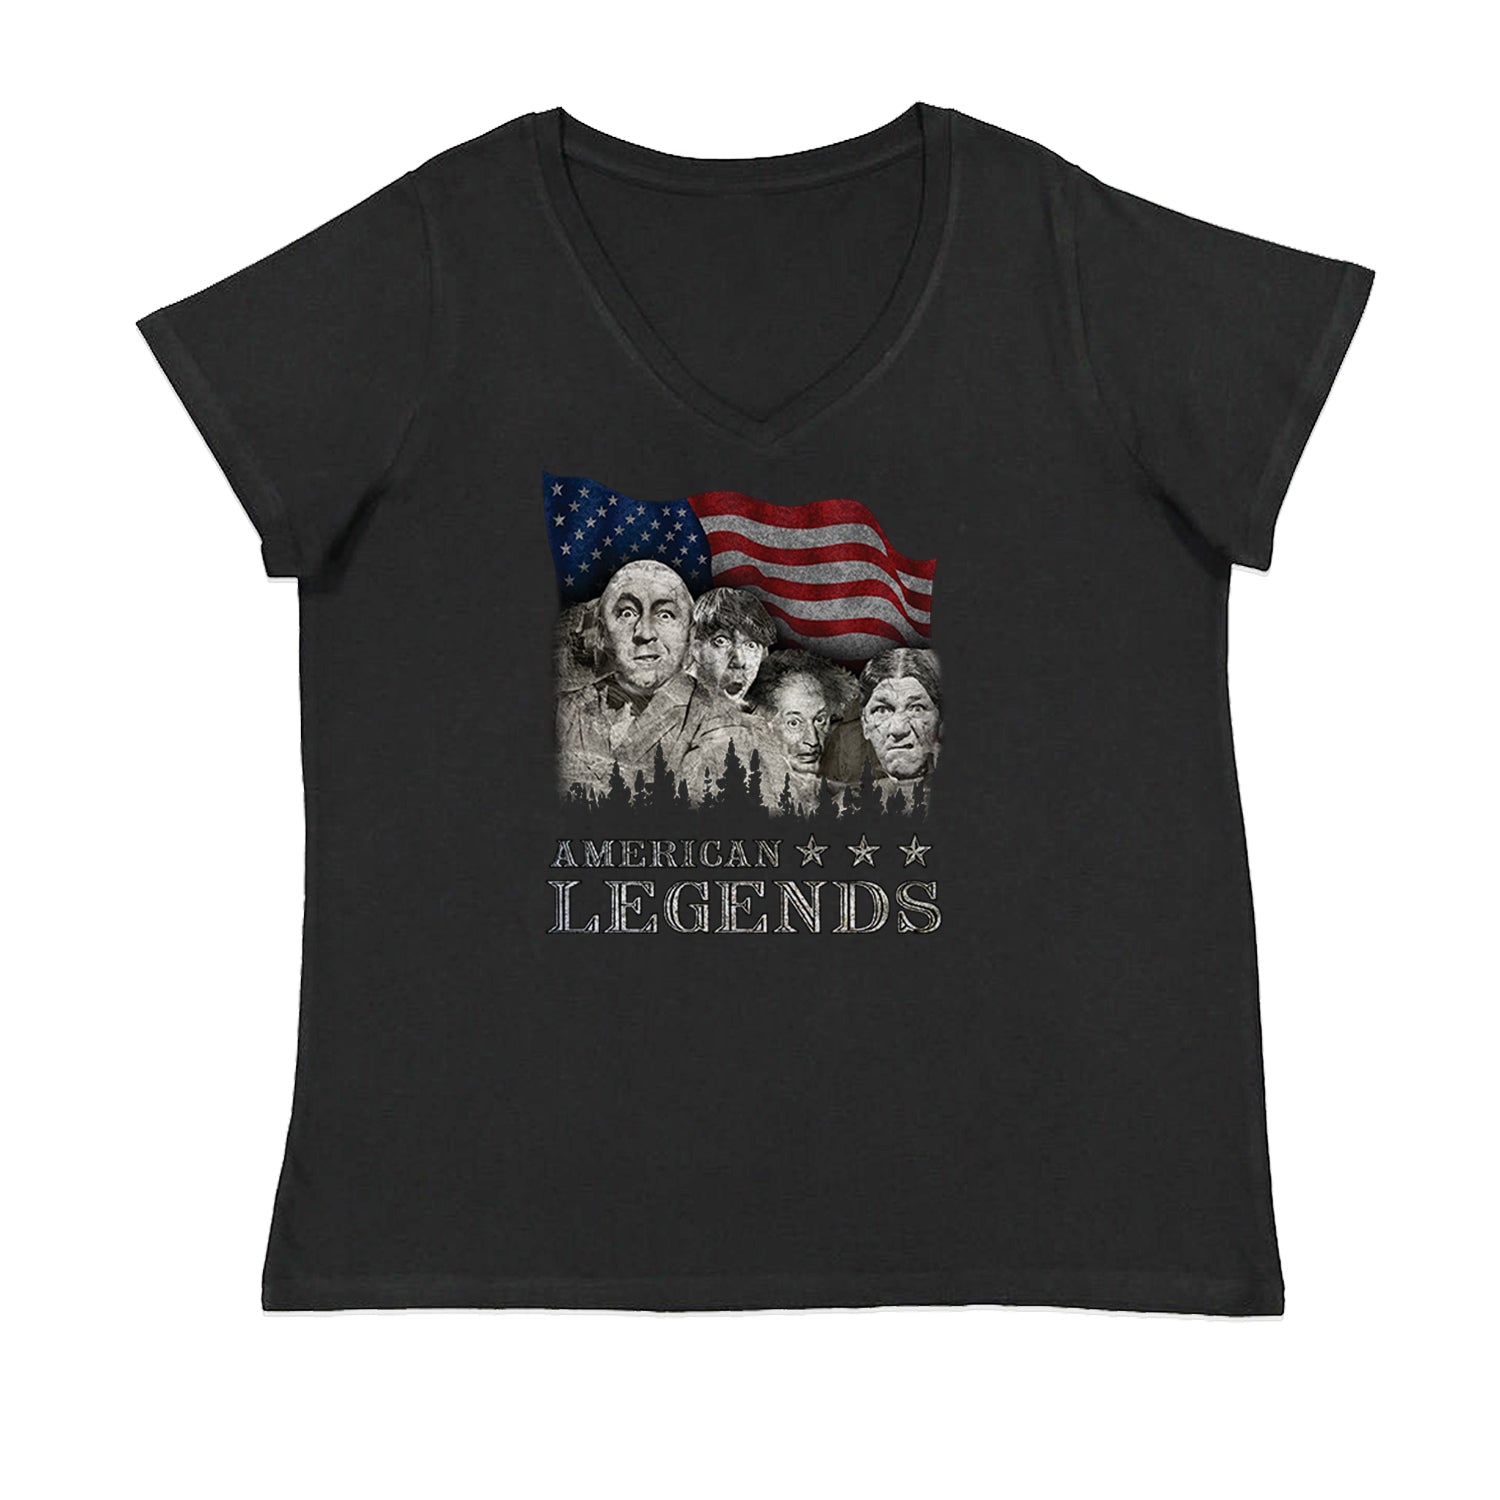 Mount RushMorons 3 Stooges Classic Retro TV Comedy Womens Plus Size V-Neck T-shirt